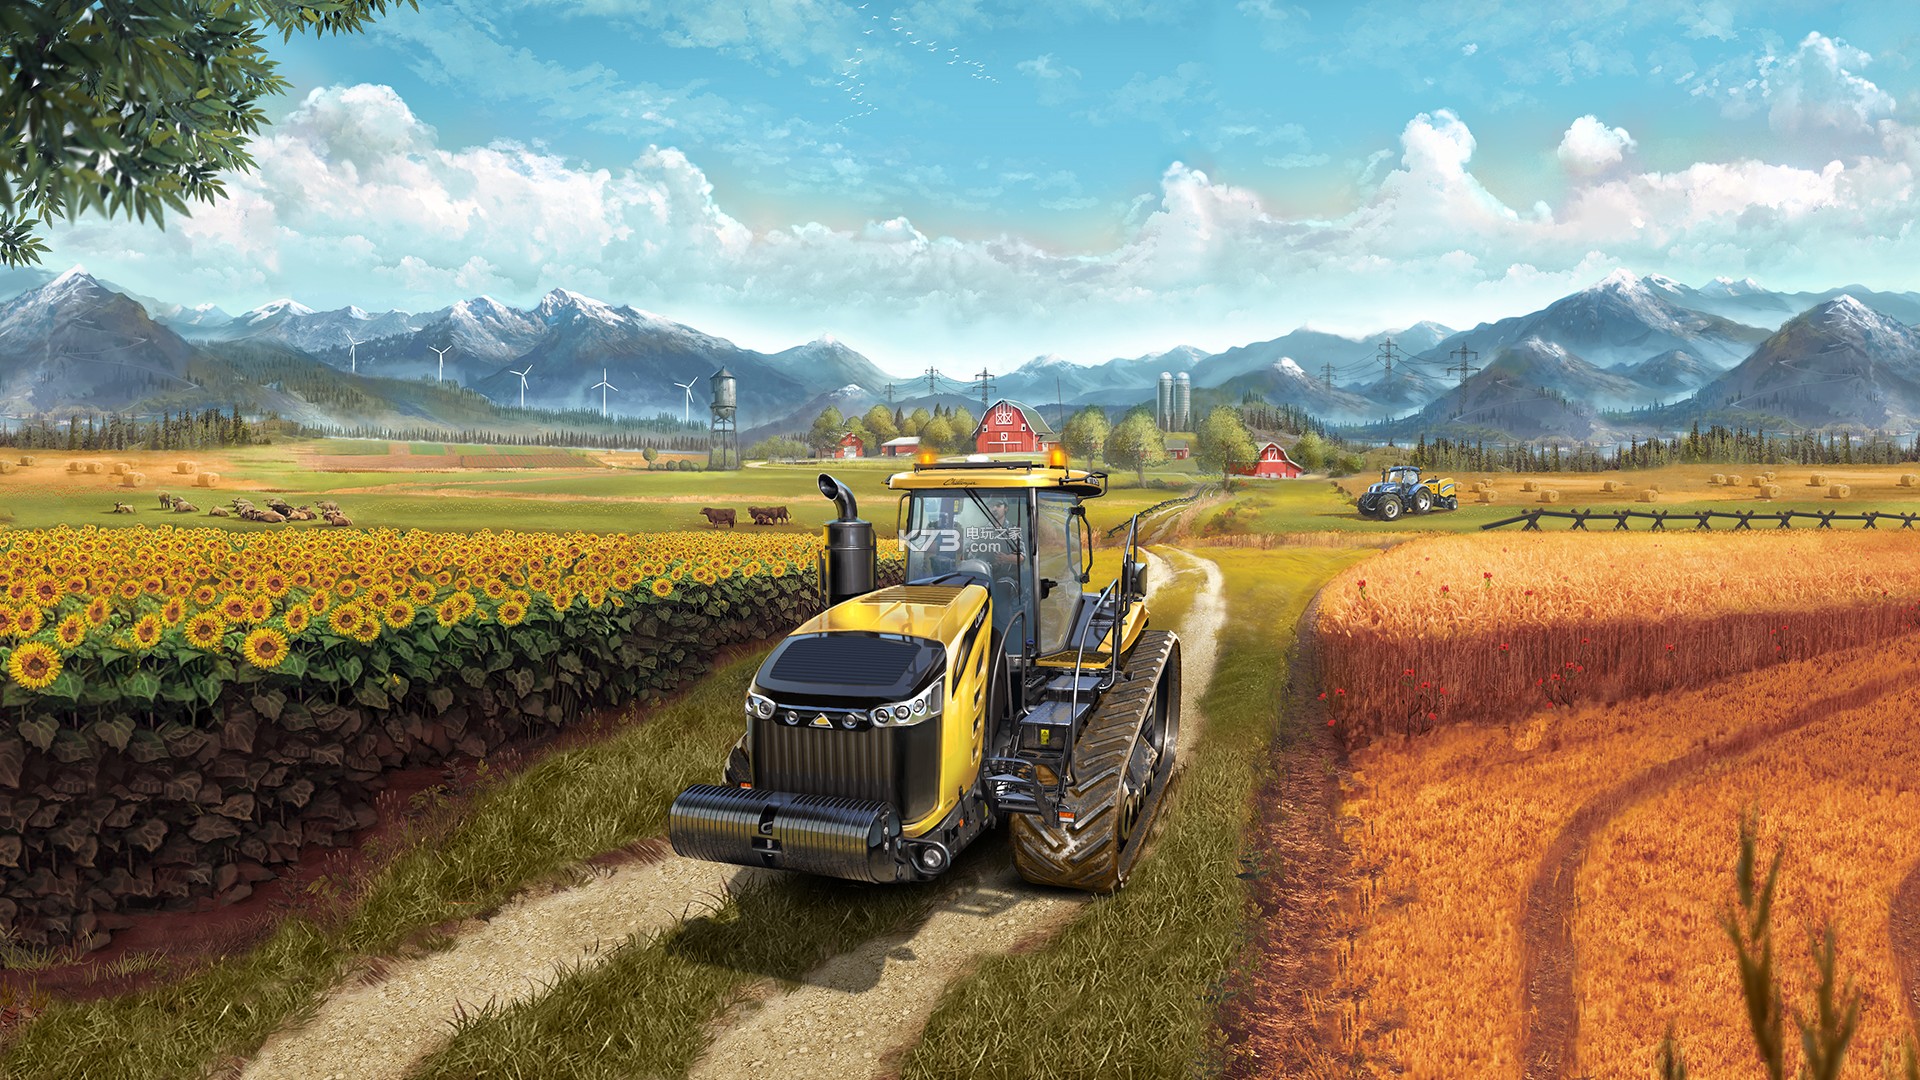 ps4 模拟农场17中文版下载 模拟农场17官方中